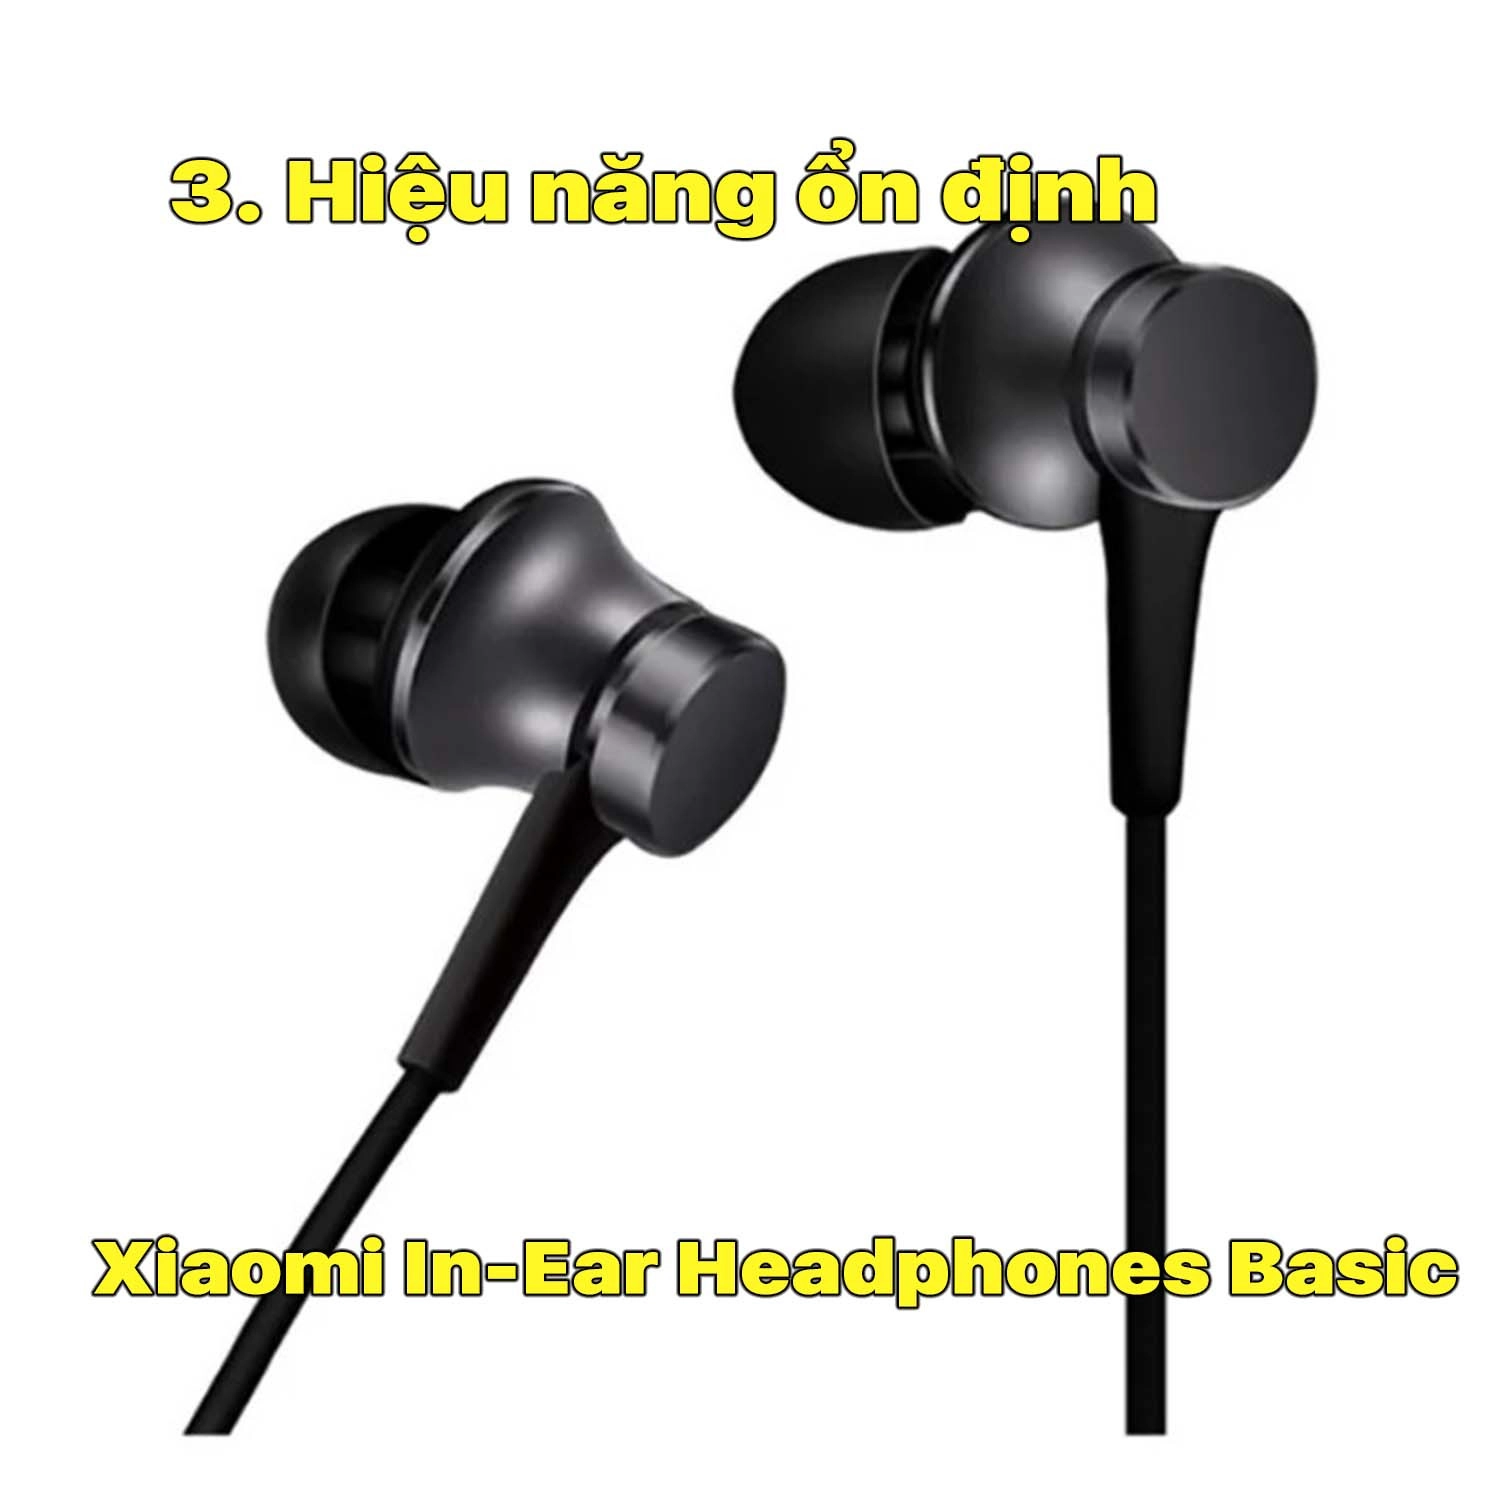 tai-nghe-xiaomi-in-ear-headphones-basic-3